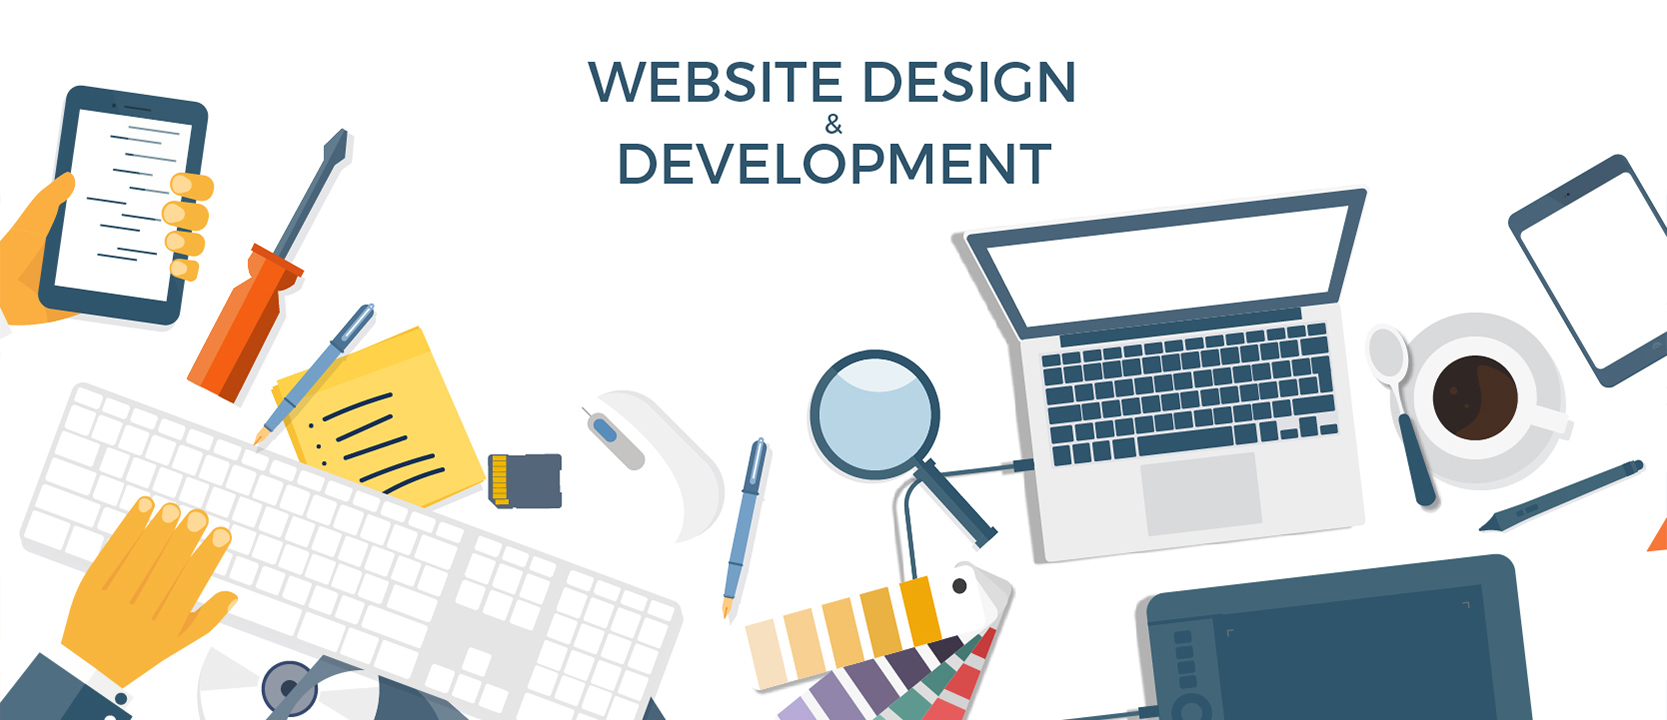 Top Web Development Company in India | Web Design and Services